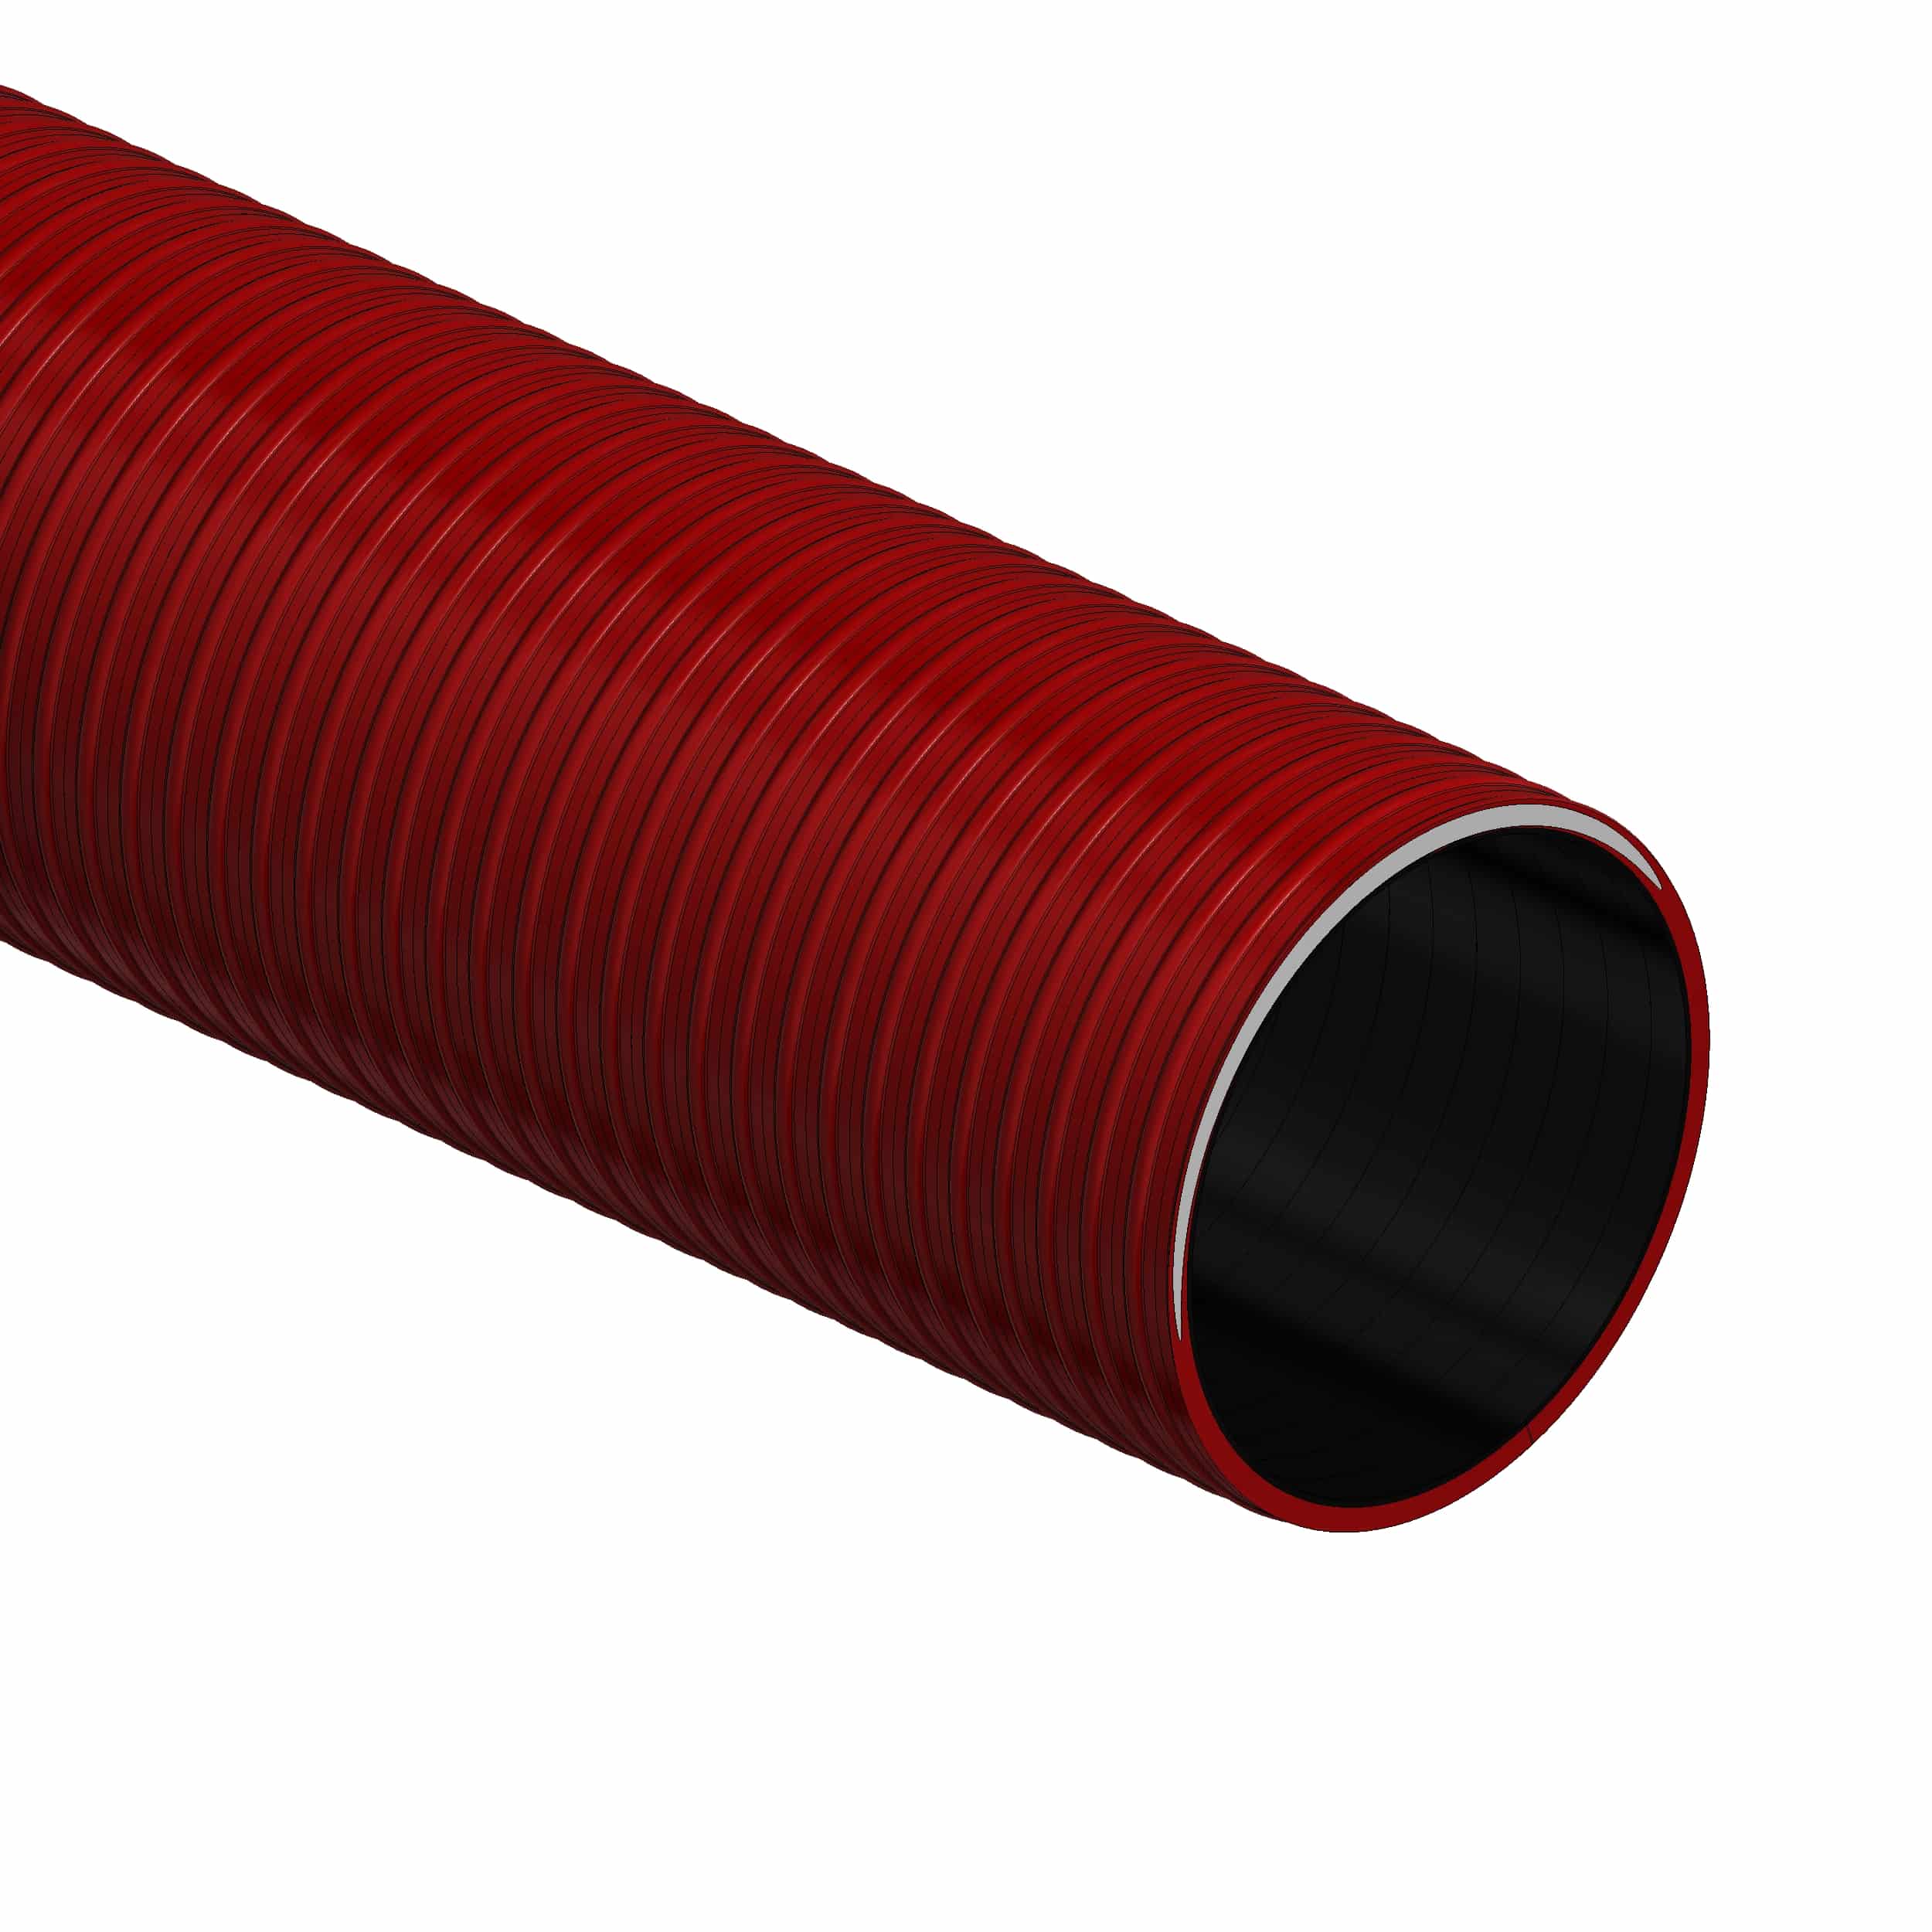 Kabel-Schutz-System KSS150 2000 mm